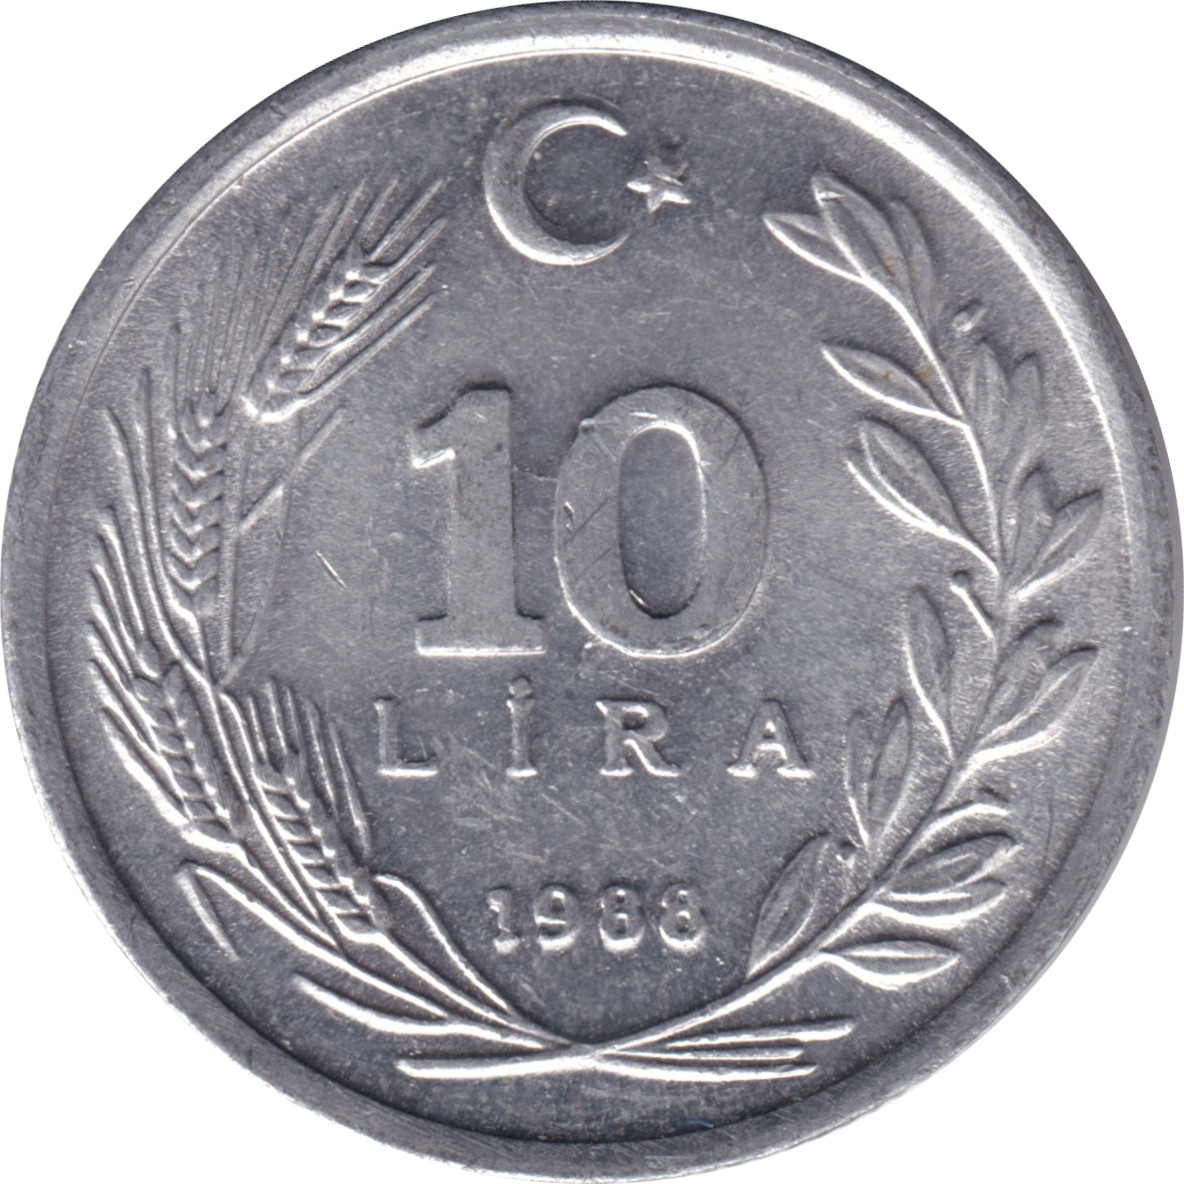 10 lira - Moustafa Kemal - Head